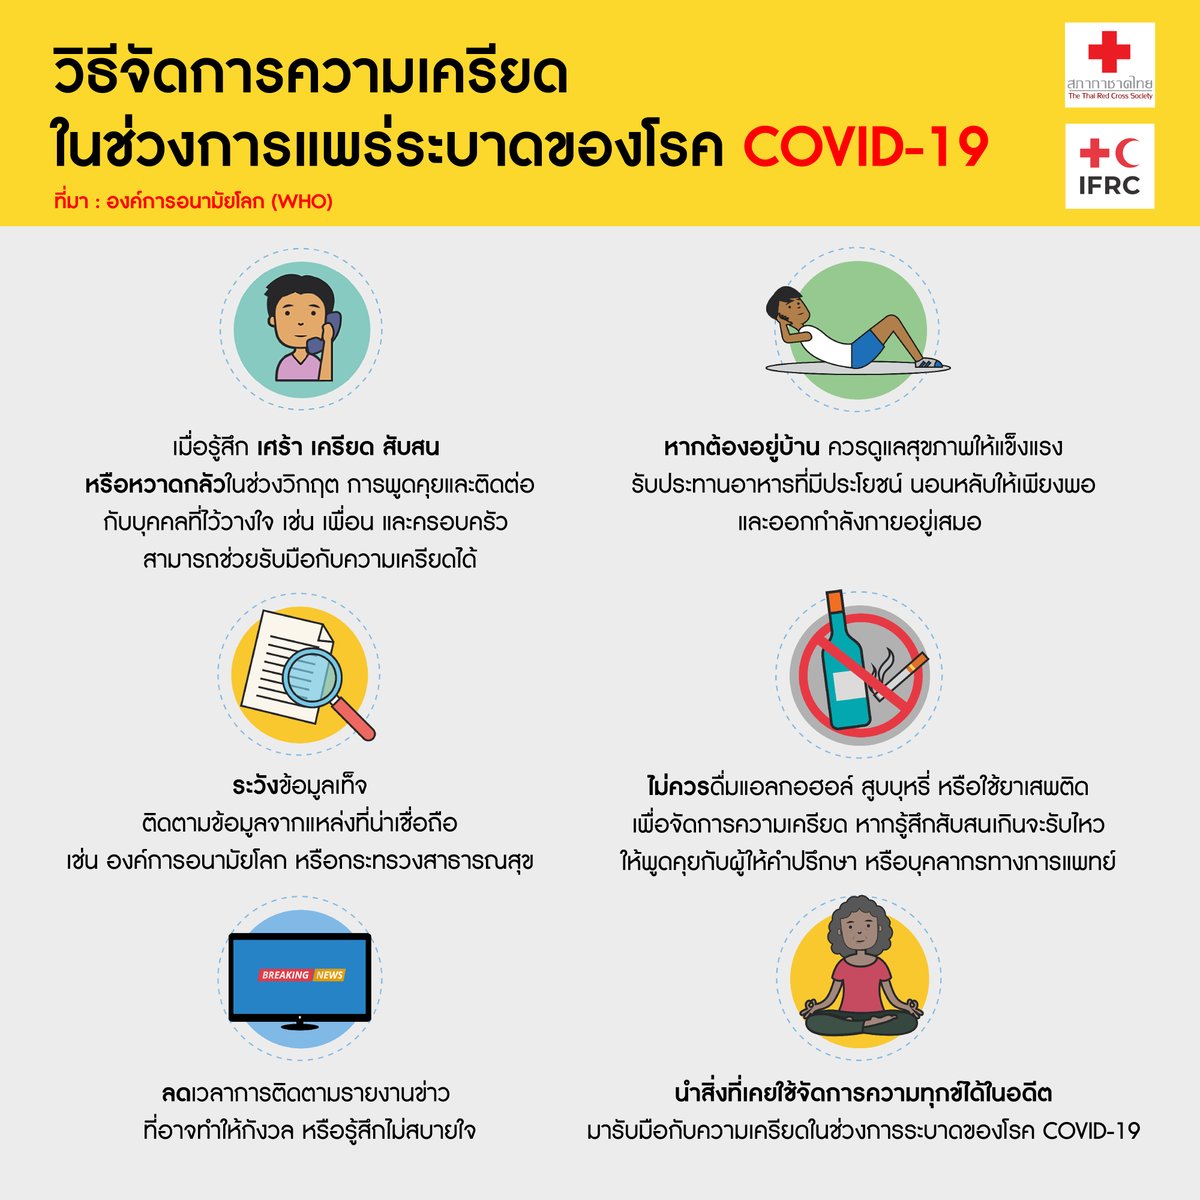 Thai Red Cross Society On Twitter: 